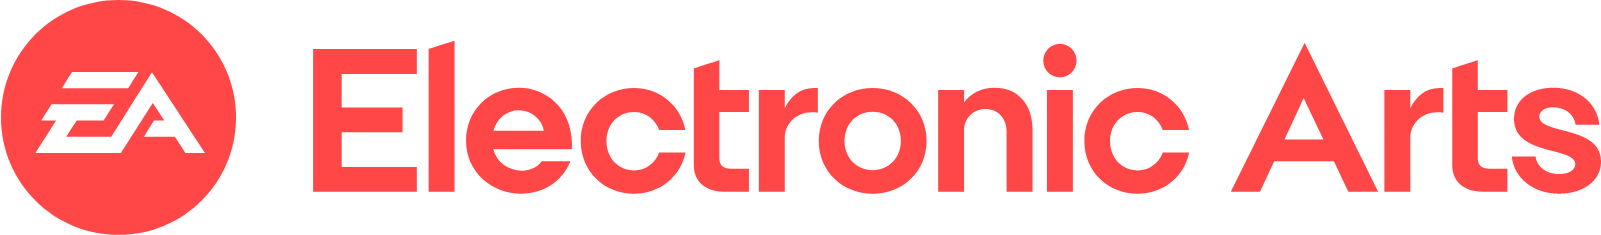 Electronic Arts logo large (transparent PNG)